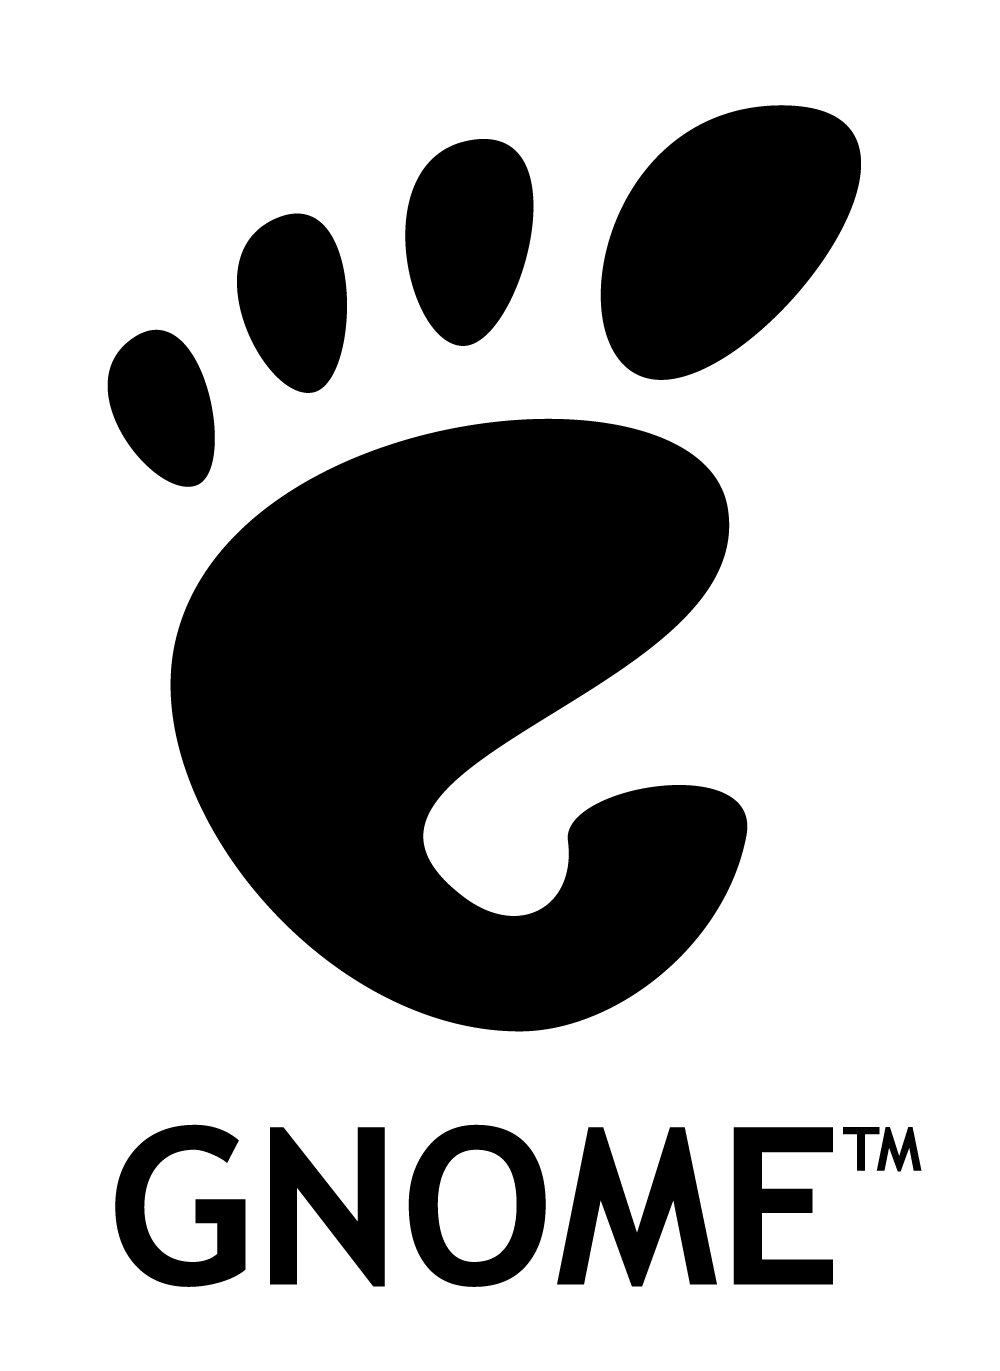 gnome2-logo-black-1Kx1.3K